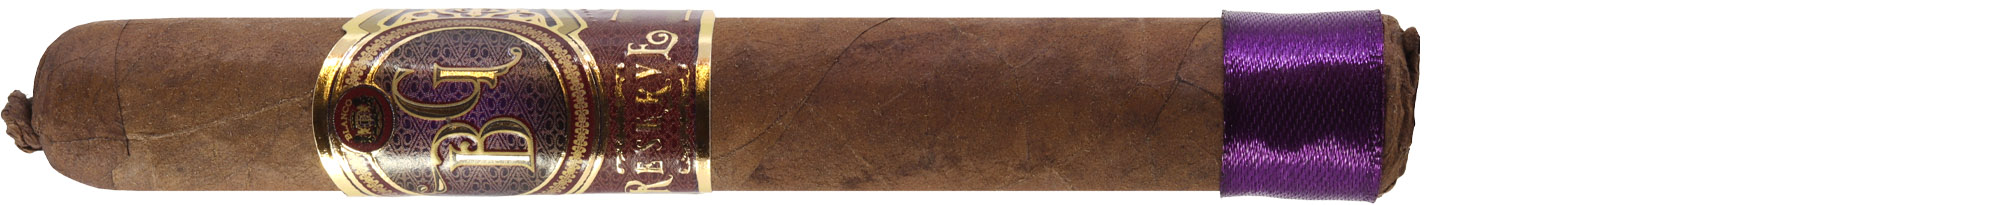 Blanco Cigar Obsession BG Reserve Box Pressed Short Lonsdale